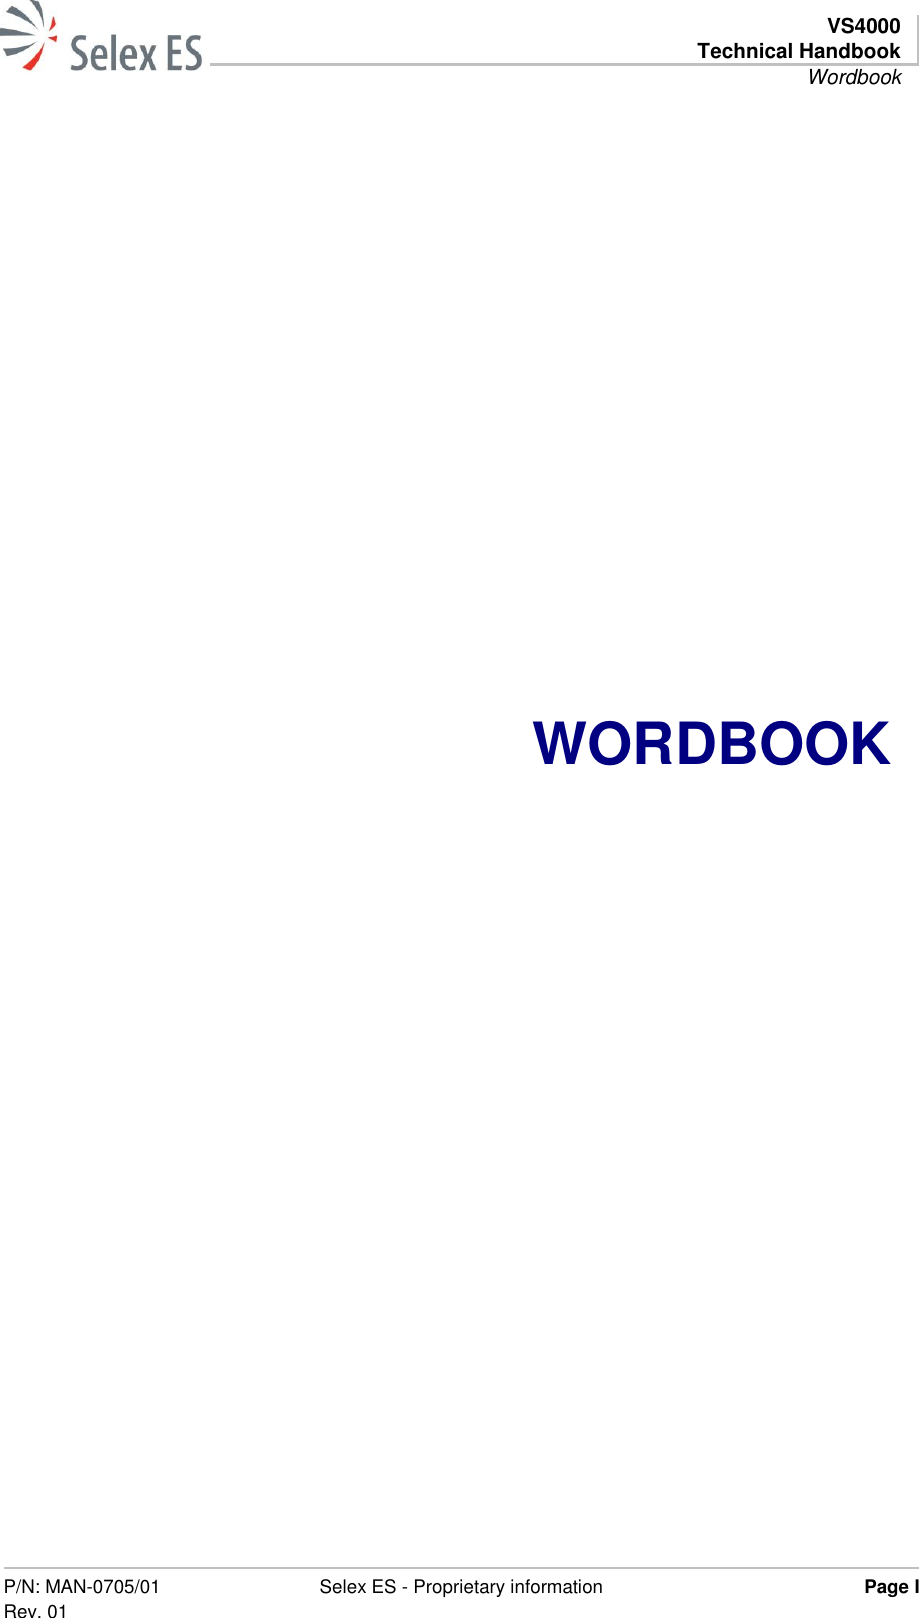   VS4000 Technical Handbook Wordbook  P/N: MAN-0705/01 Rev. 01 Selex ES - Proprietary information Page I    WORDBOOK     